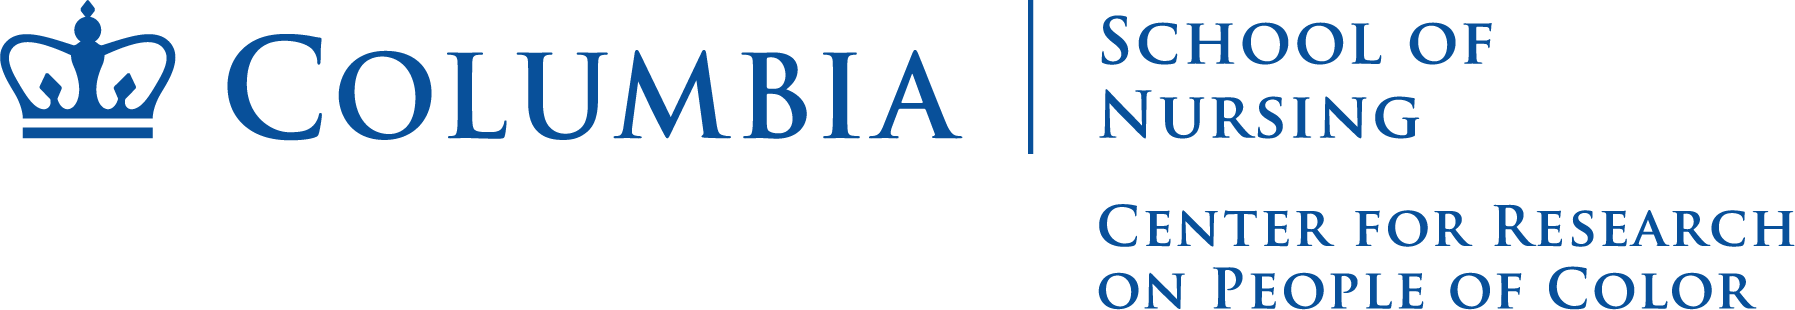 Columbia School of Nursing logo